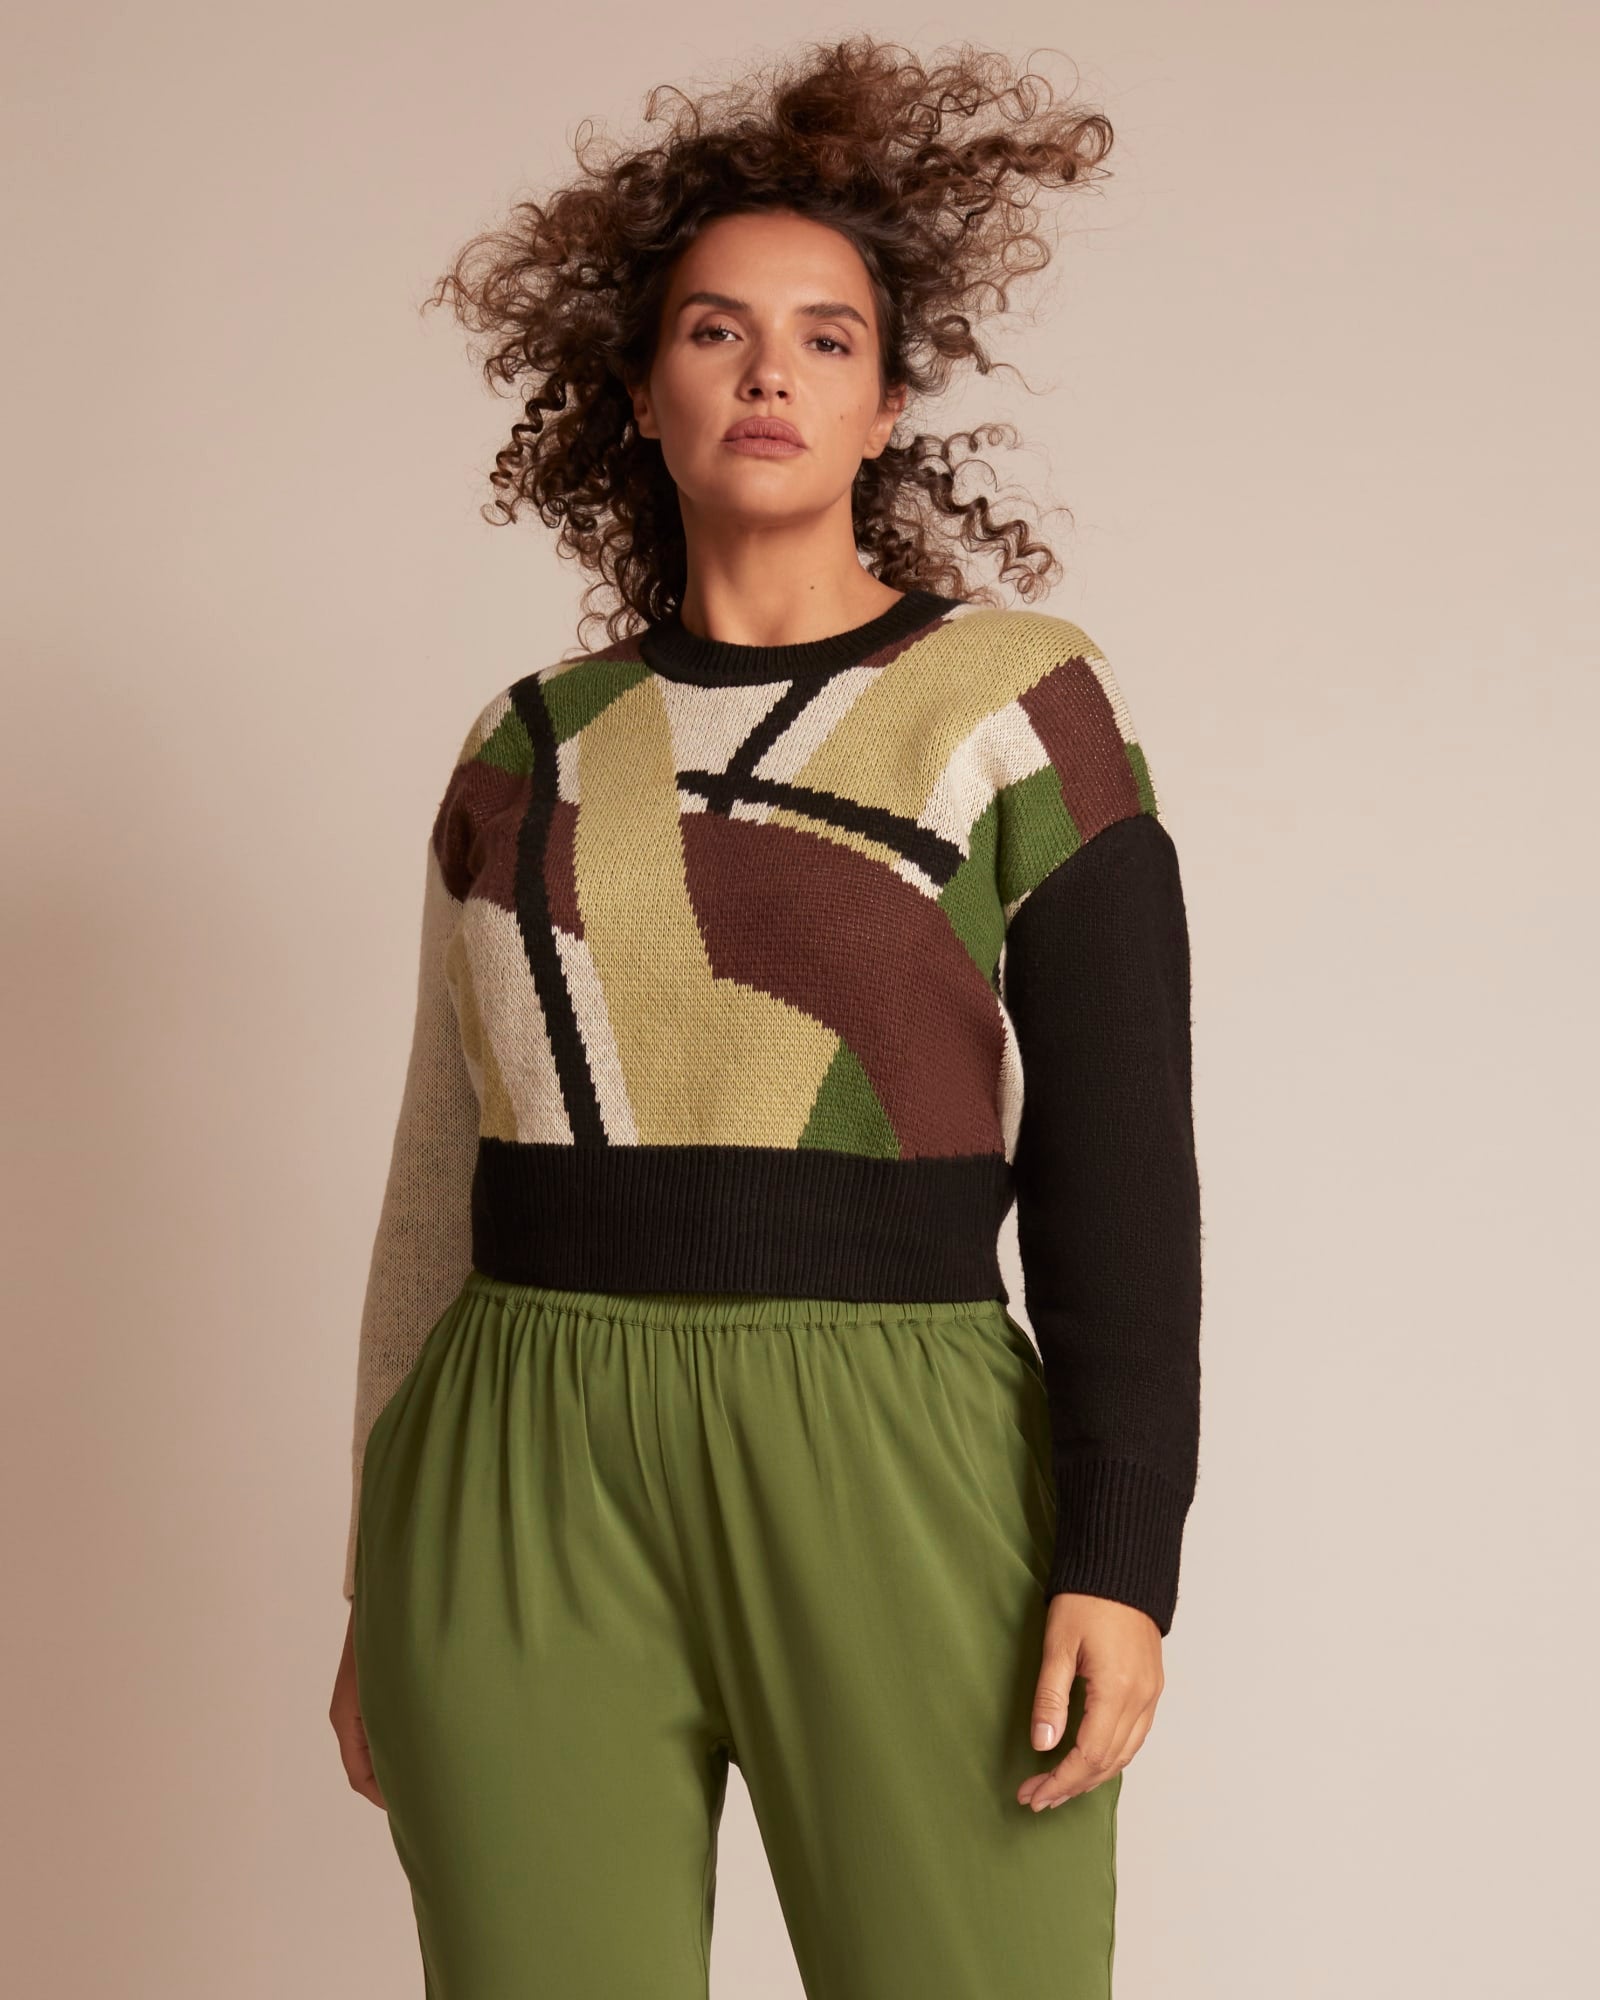 Alexis Sweater | Light Green / Brown